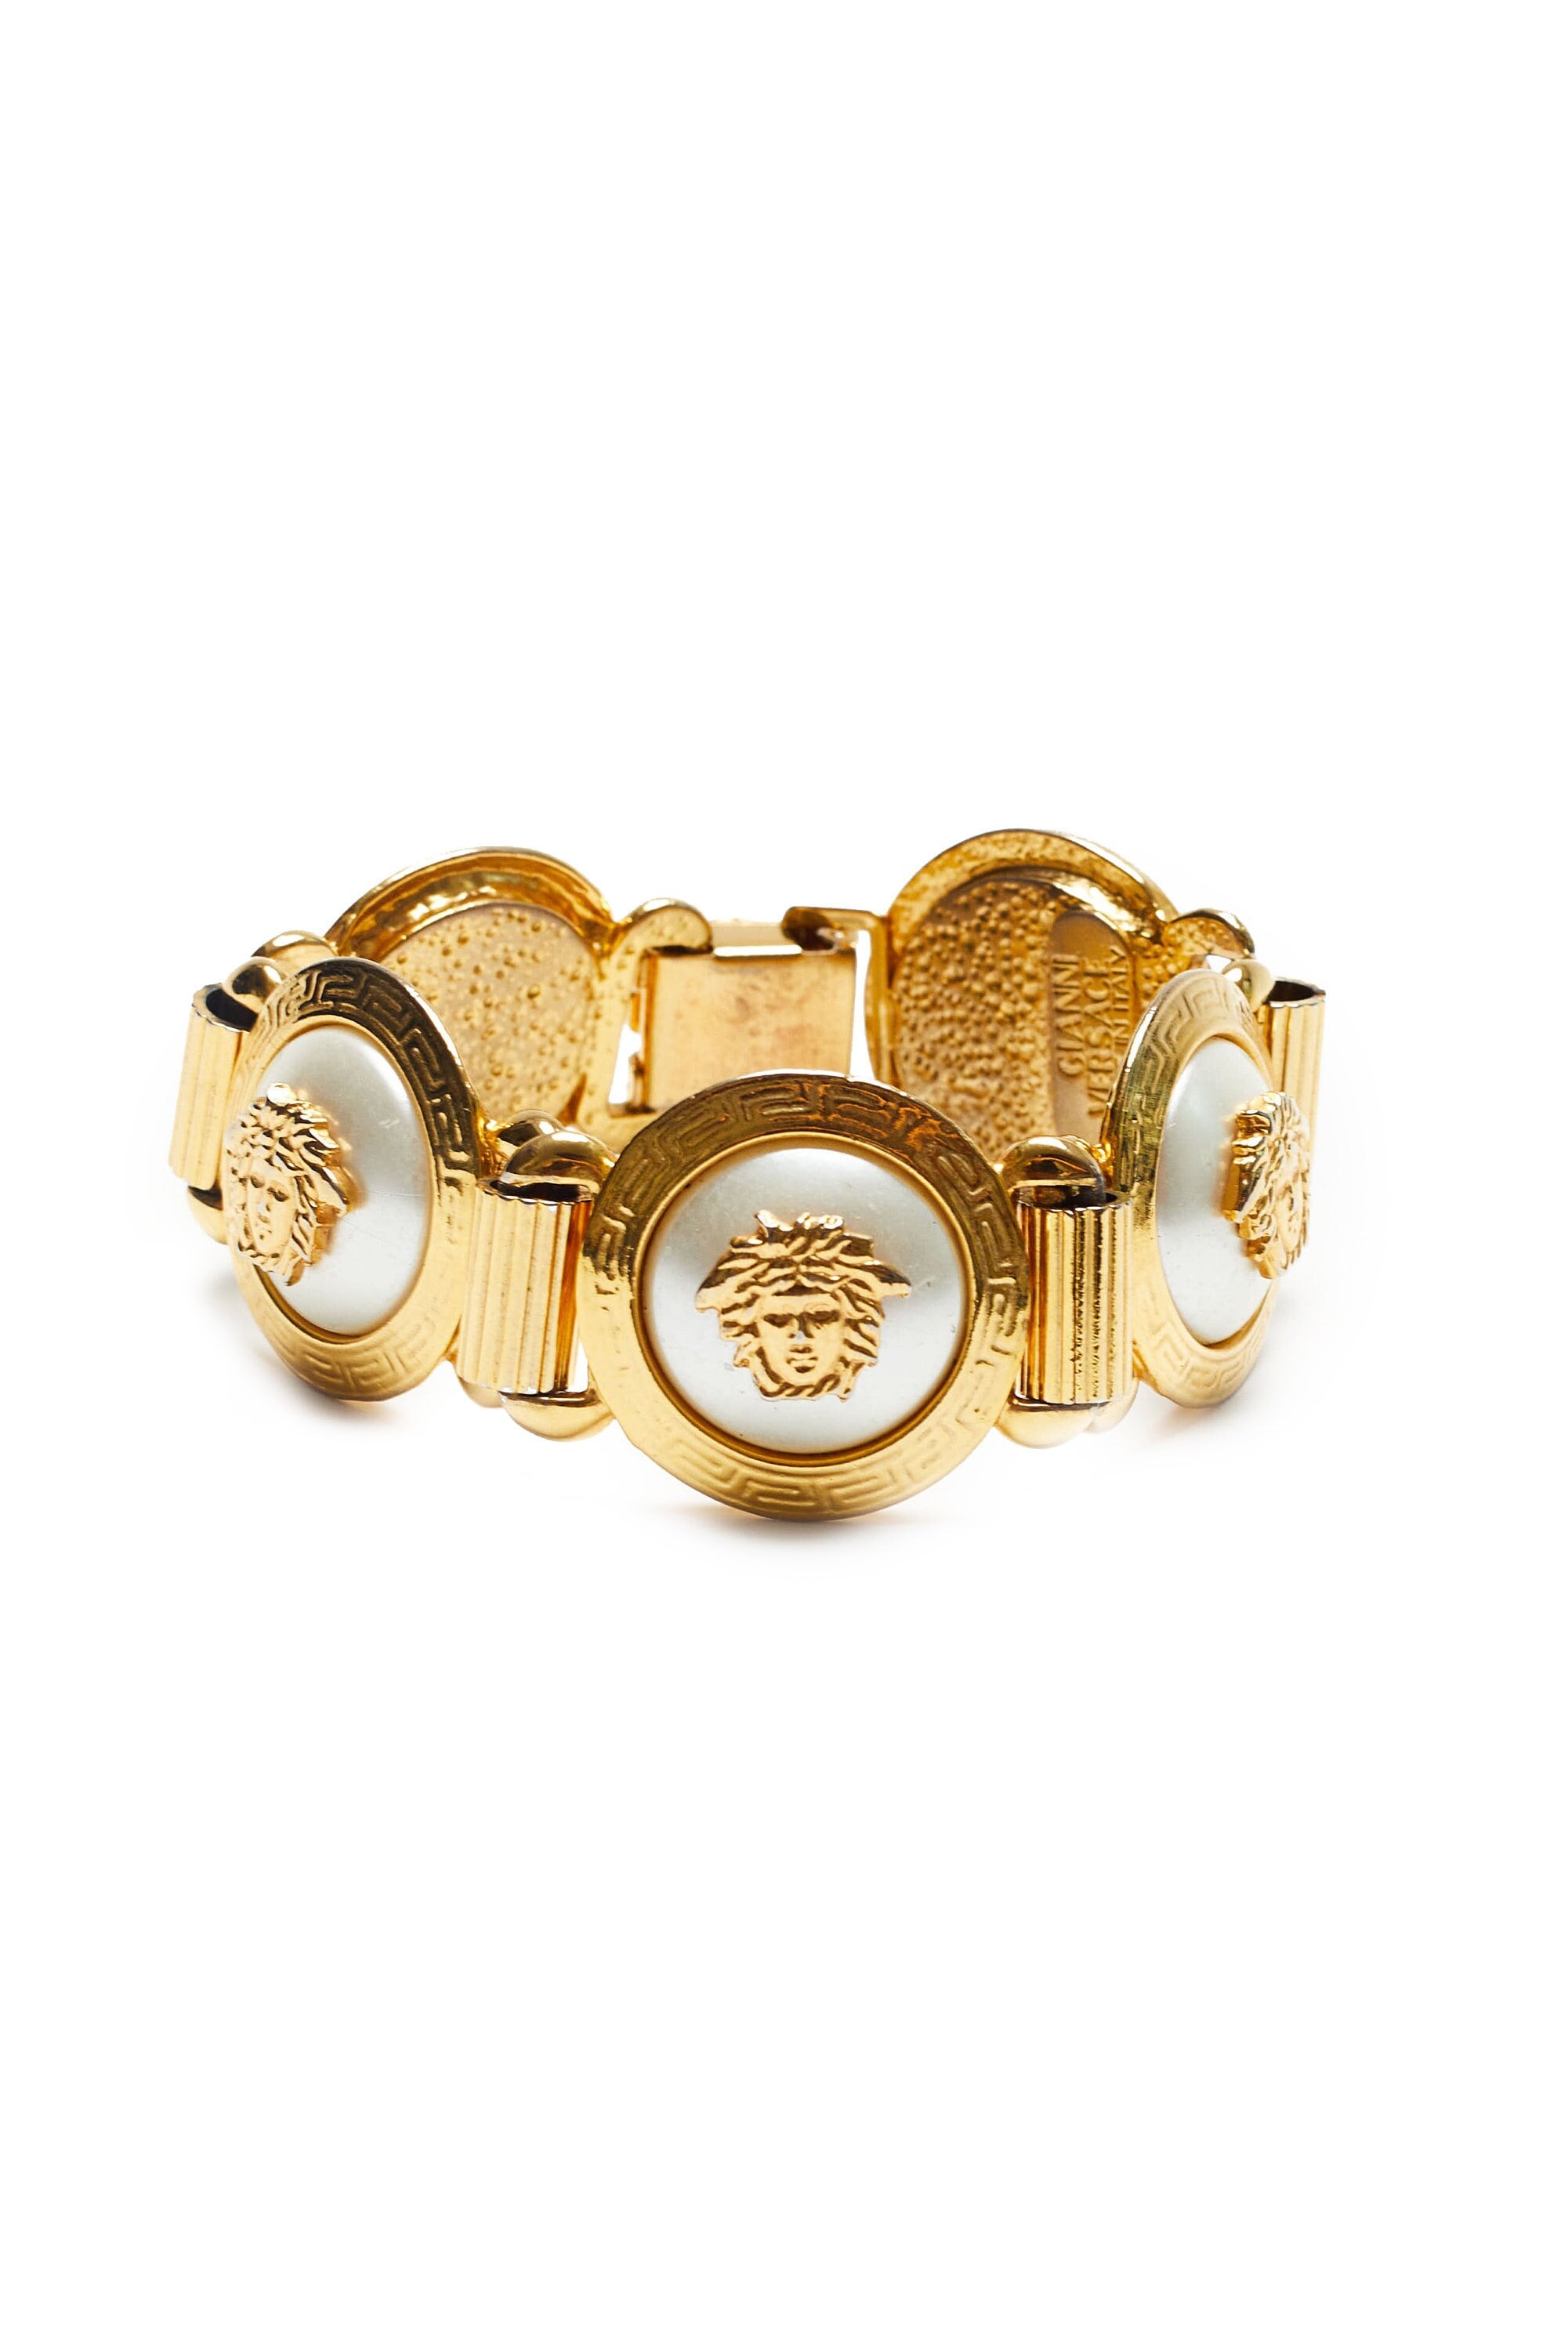 Versace Bracelet 18k White Gold Bangle Greek Key Design 7 359g Heavy   Versace  Buy at TrueFacet